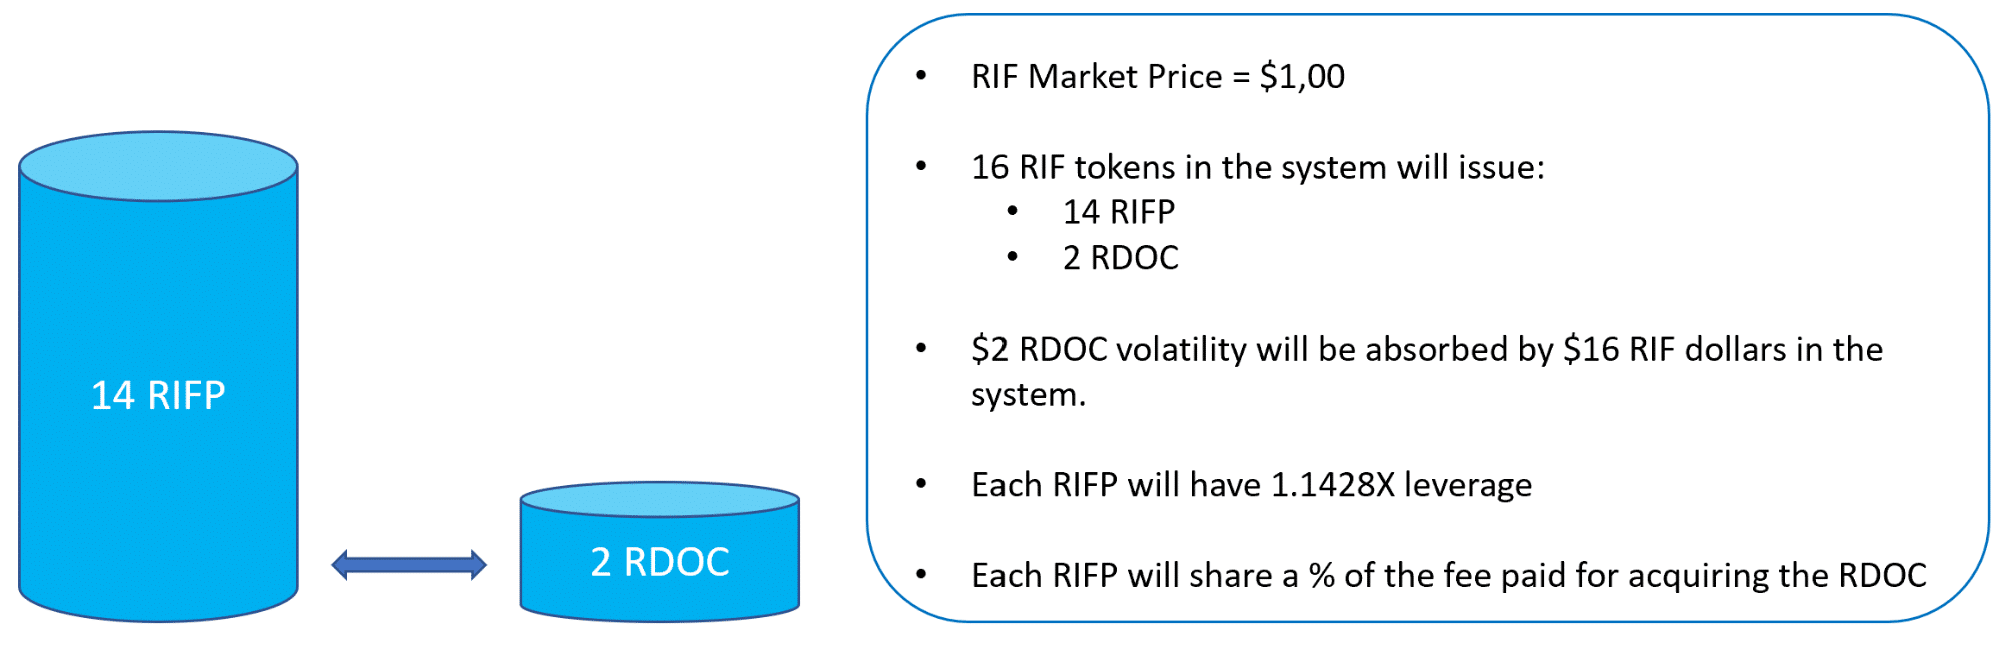 RIF on Chain Taps RSK Blockchain to Launch DeFi Platform - 2